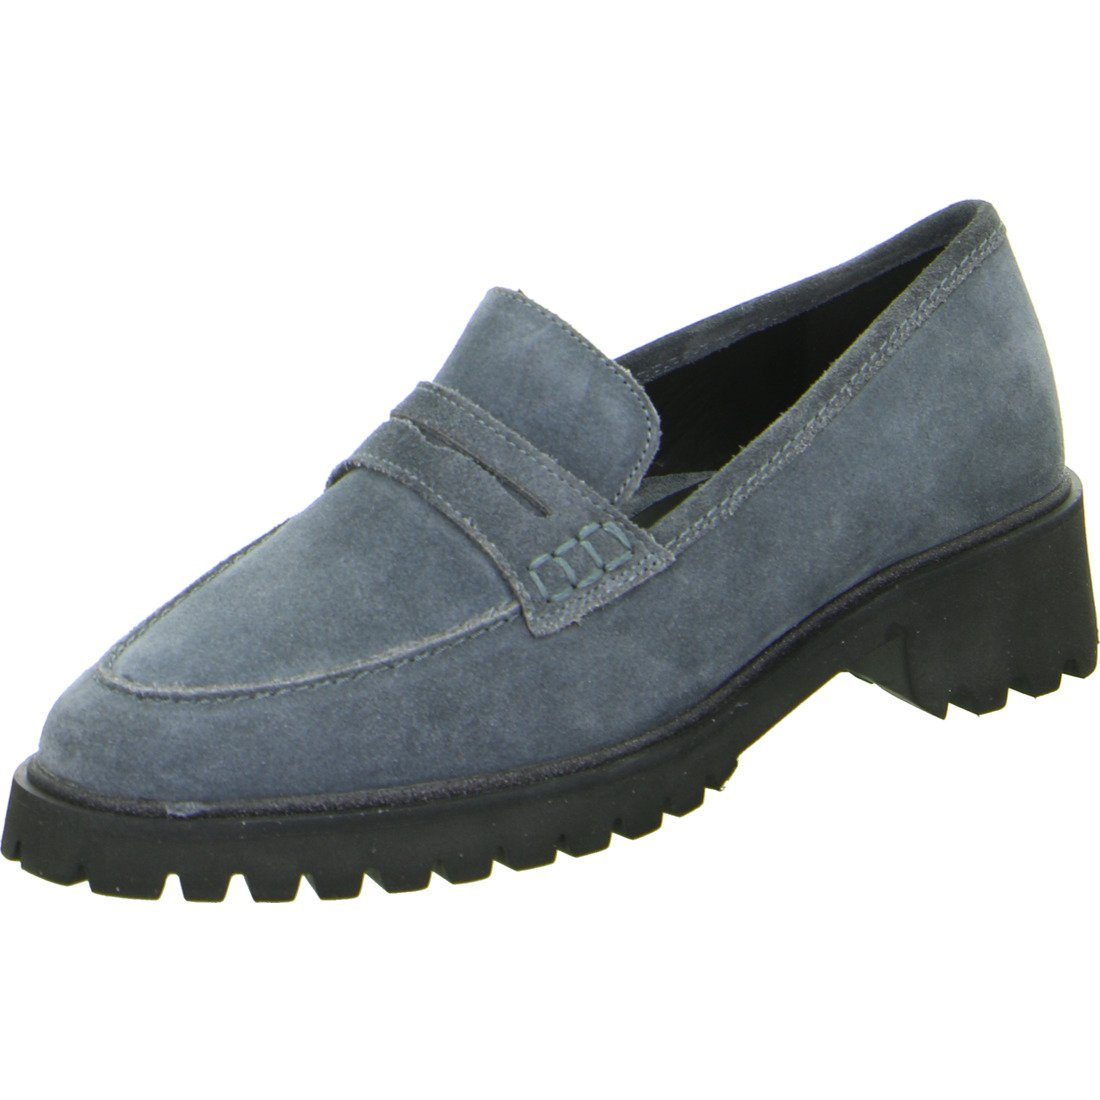 Überwältigende Qualität Ara Ara Schuhe, Slipper Slipper 049582 grau Kent Velours - Damen